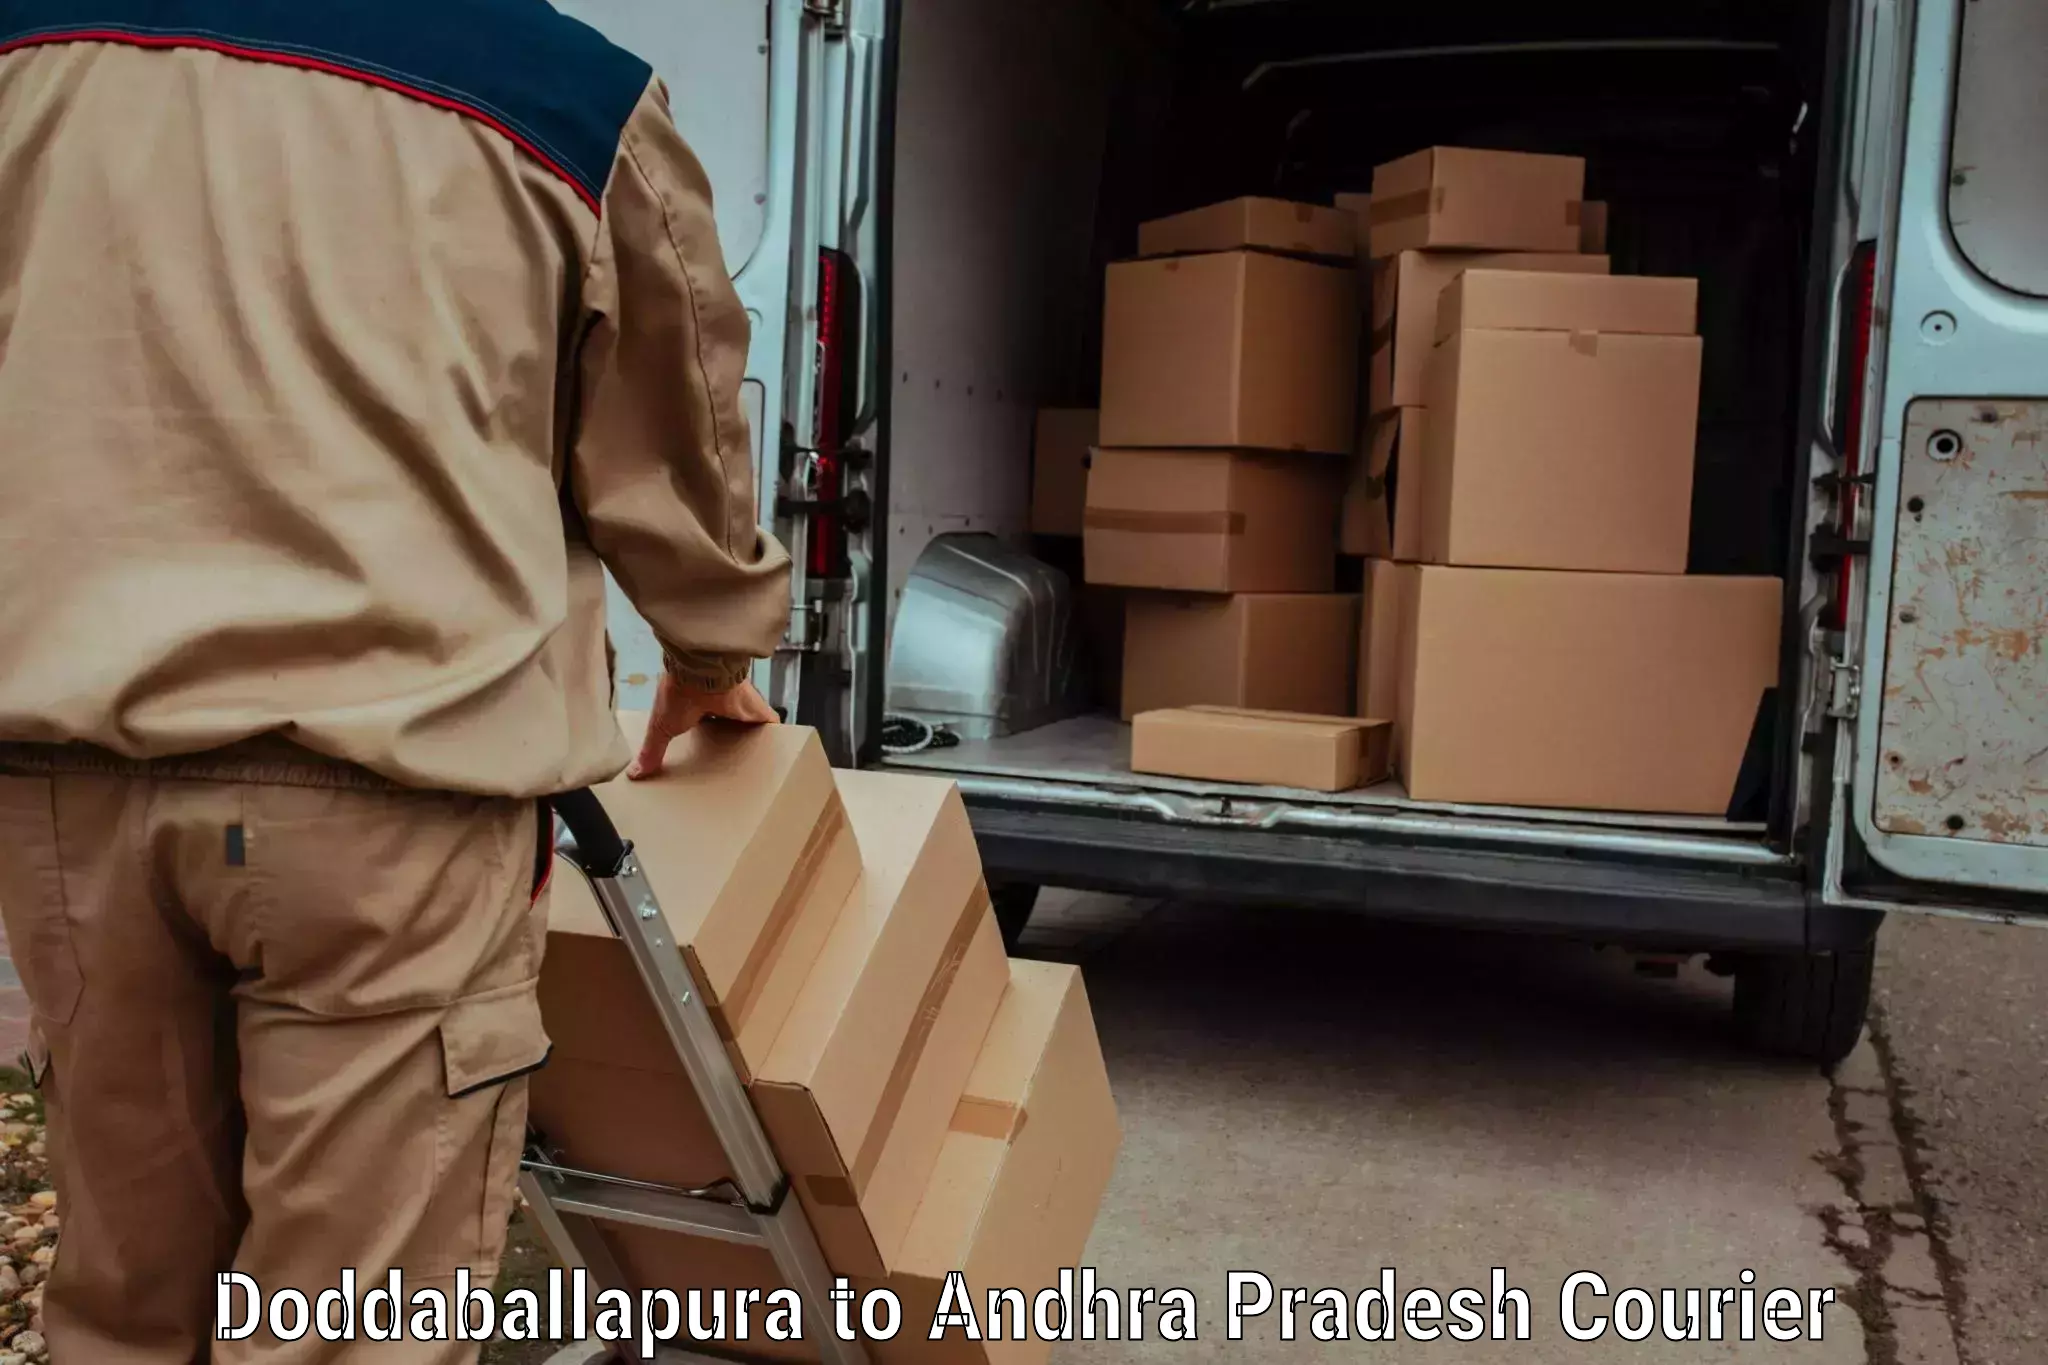 On-call courier service Doddaballapura to Addateegala